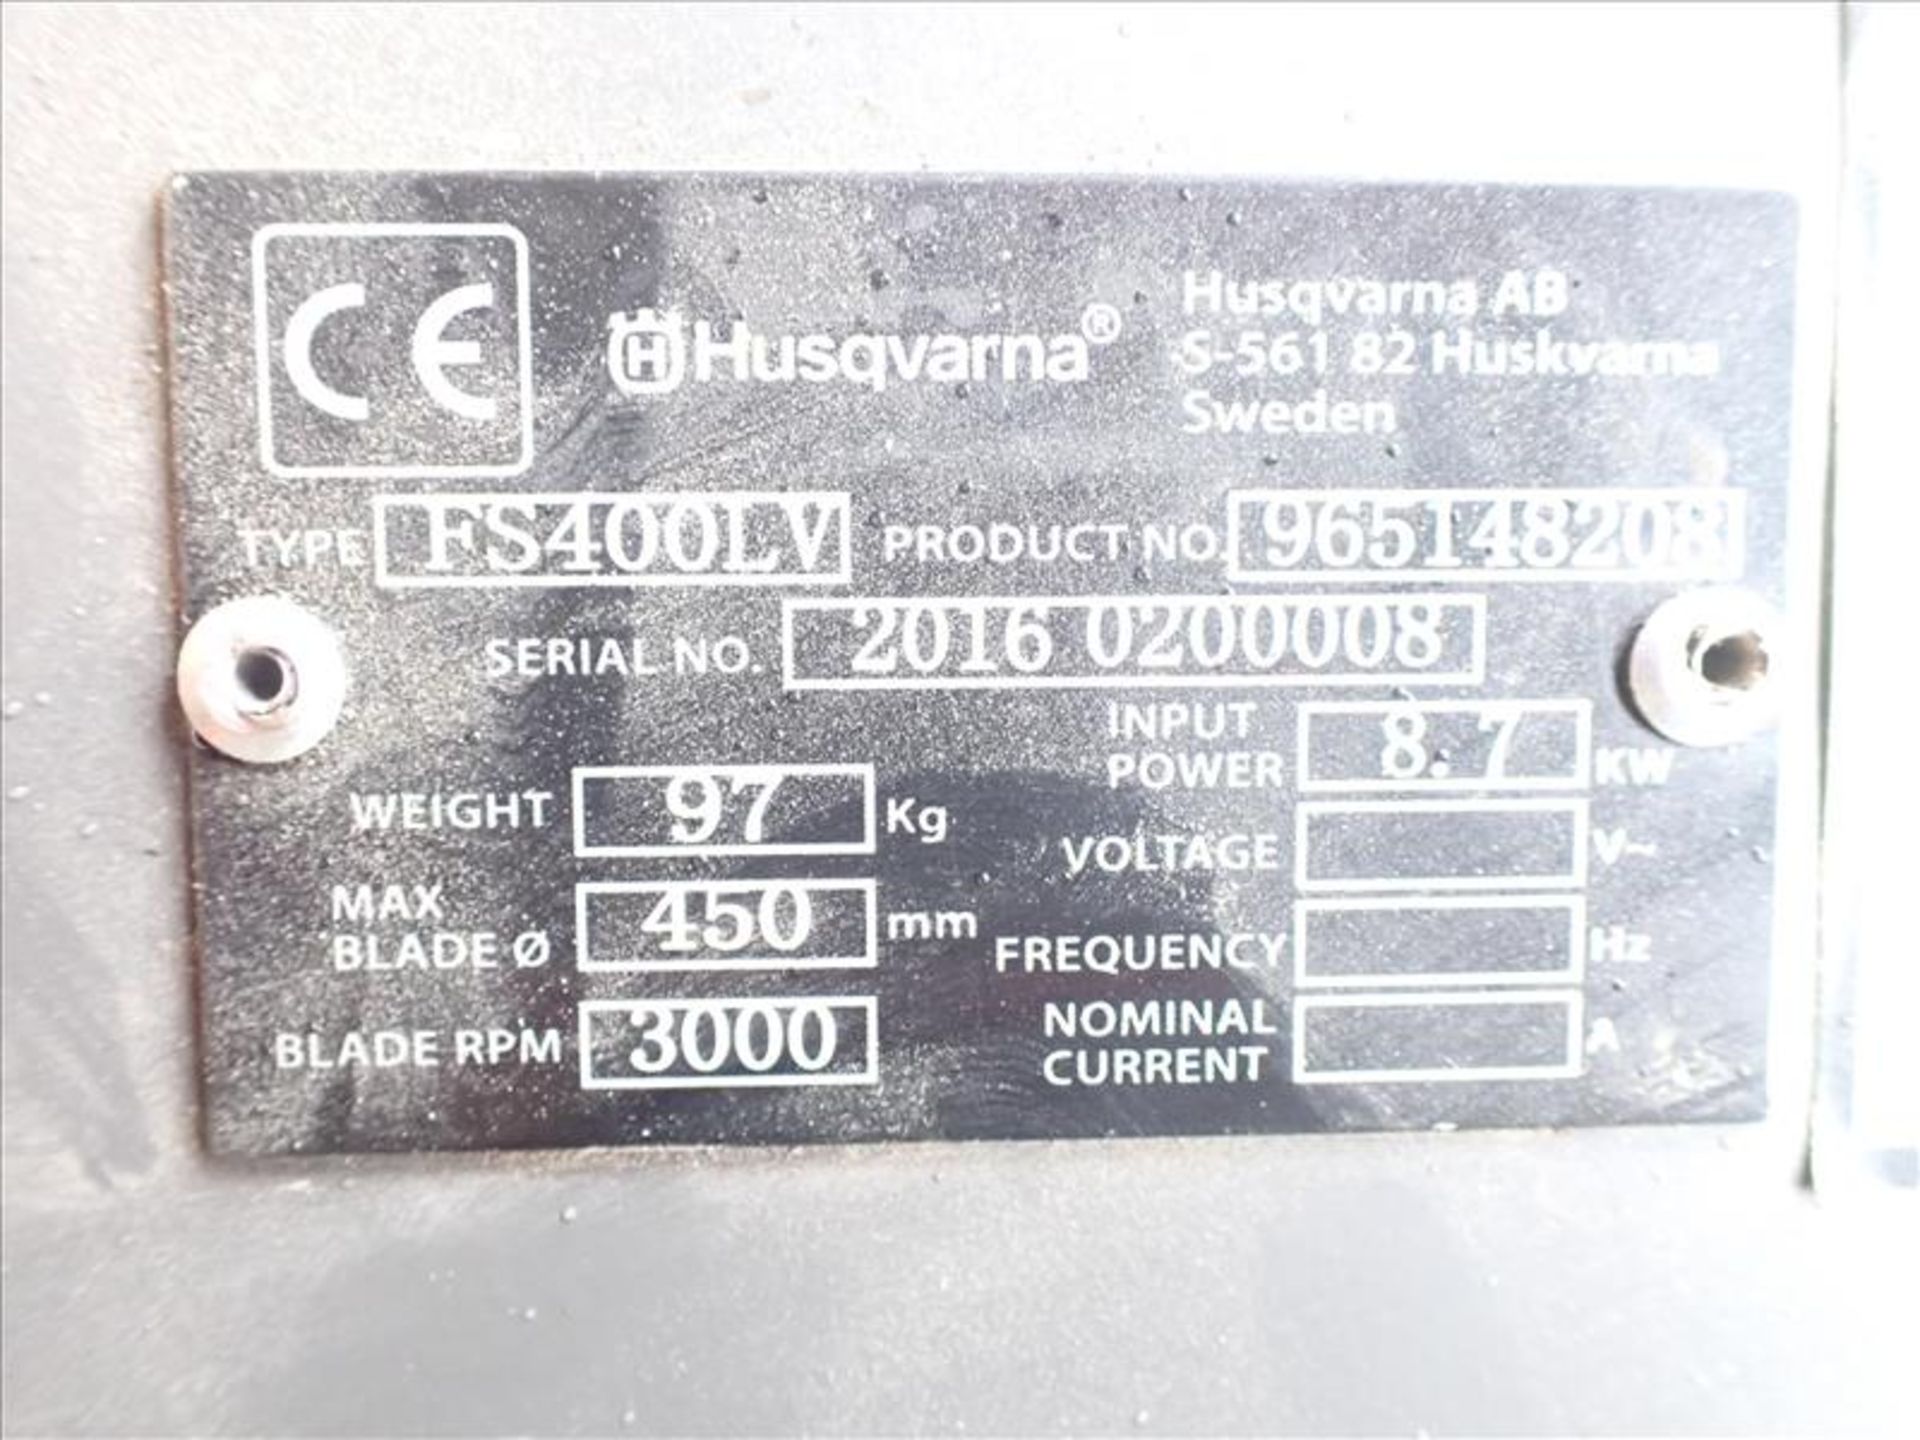 2016 Husqvarna Floor Saw, model FS400LV, S/N.20160200008, w/four stroke engine, 450mm max blade - Image 4 of 5